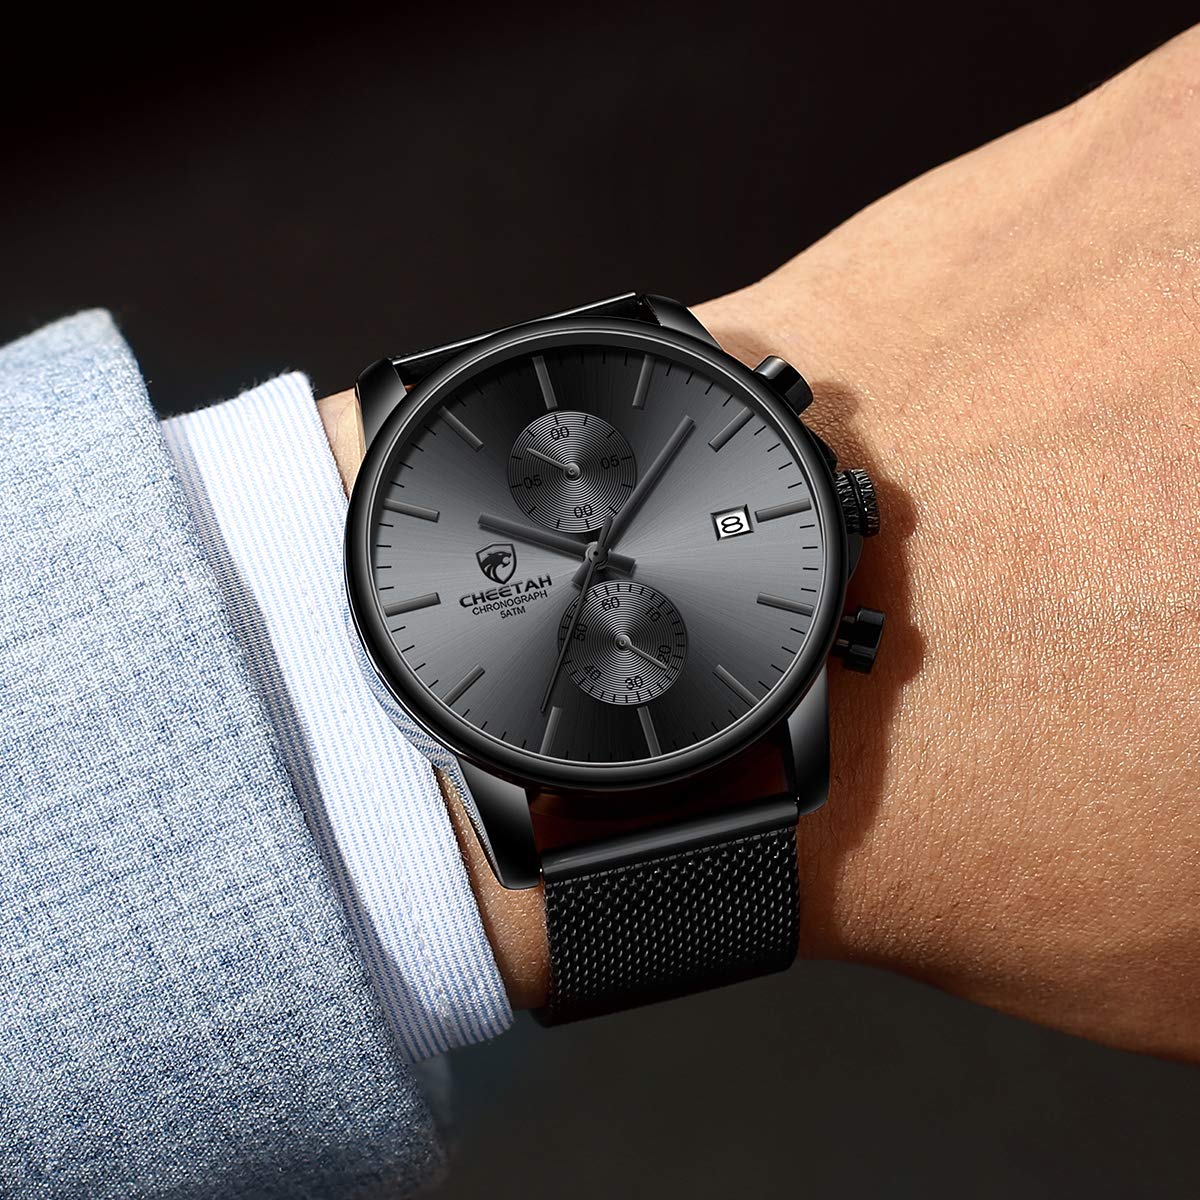 GOLDEN HOUR Mens Watch Fashion Sleek Minimalist Quartz Analog Mesh Stainless Steel Waterproof Chronograph Watches for Men with Auto Date